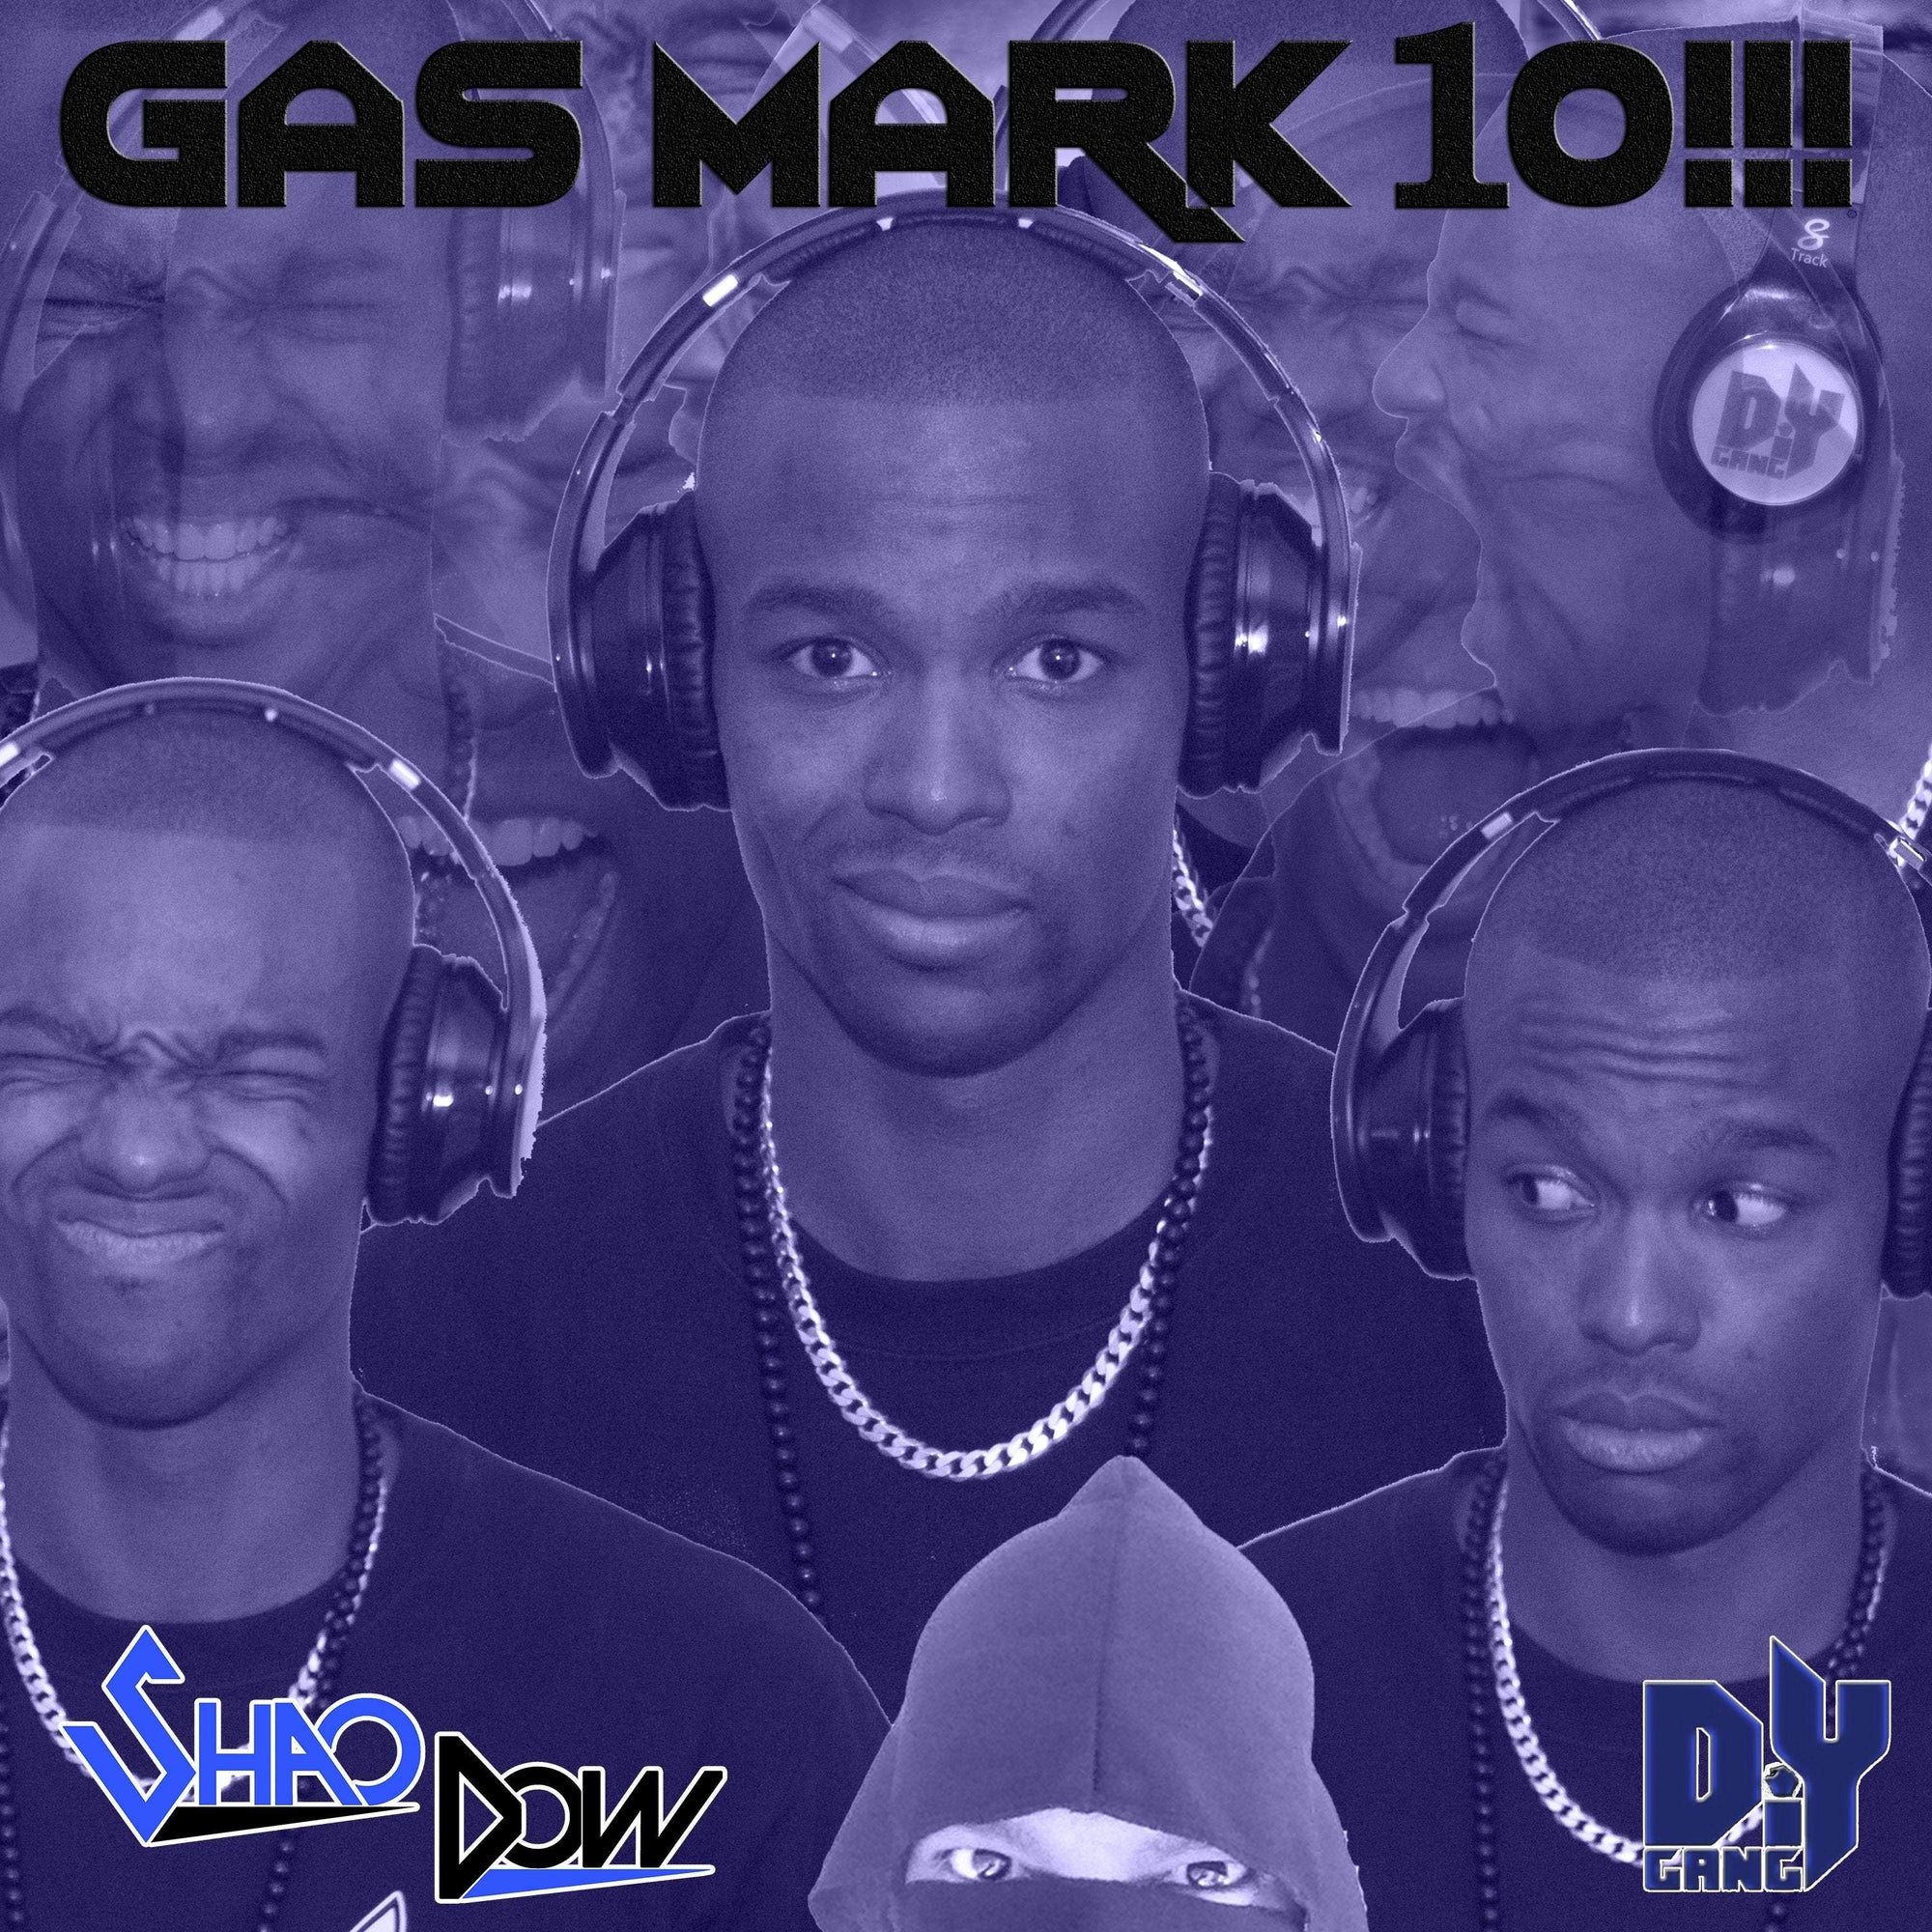 GAS MARK 10!!! Single-Shao Dow - The DiY Gang Store-DiY Gang,Gas Mark 10,Gas Mark 10 Single,Ninja,Shadow,ShaoDow,Shaowdow,shoadow,Single,Trap Mark 10